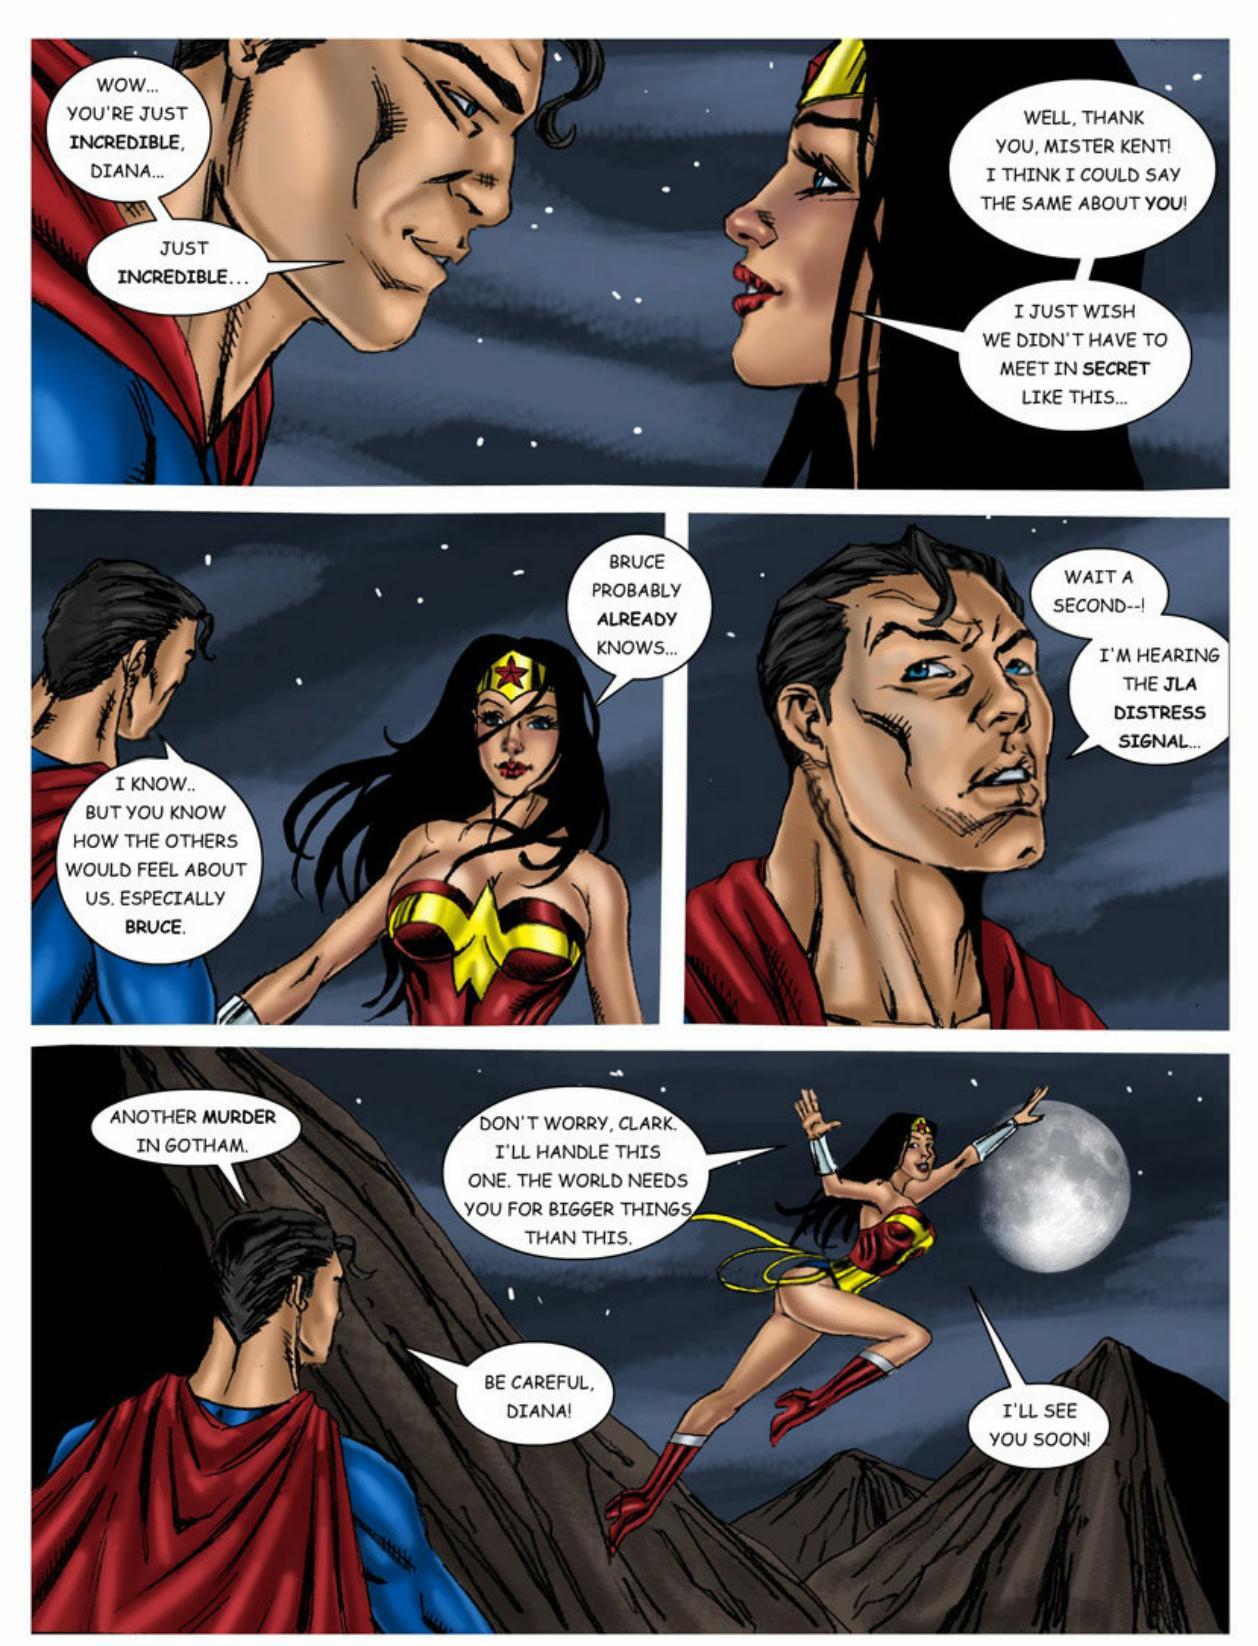 Wonder Woman vs Predator picture